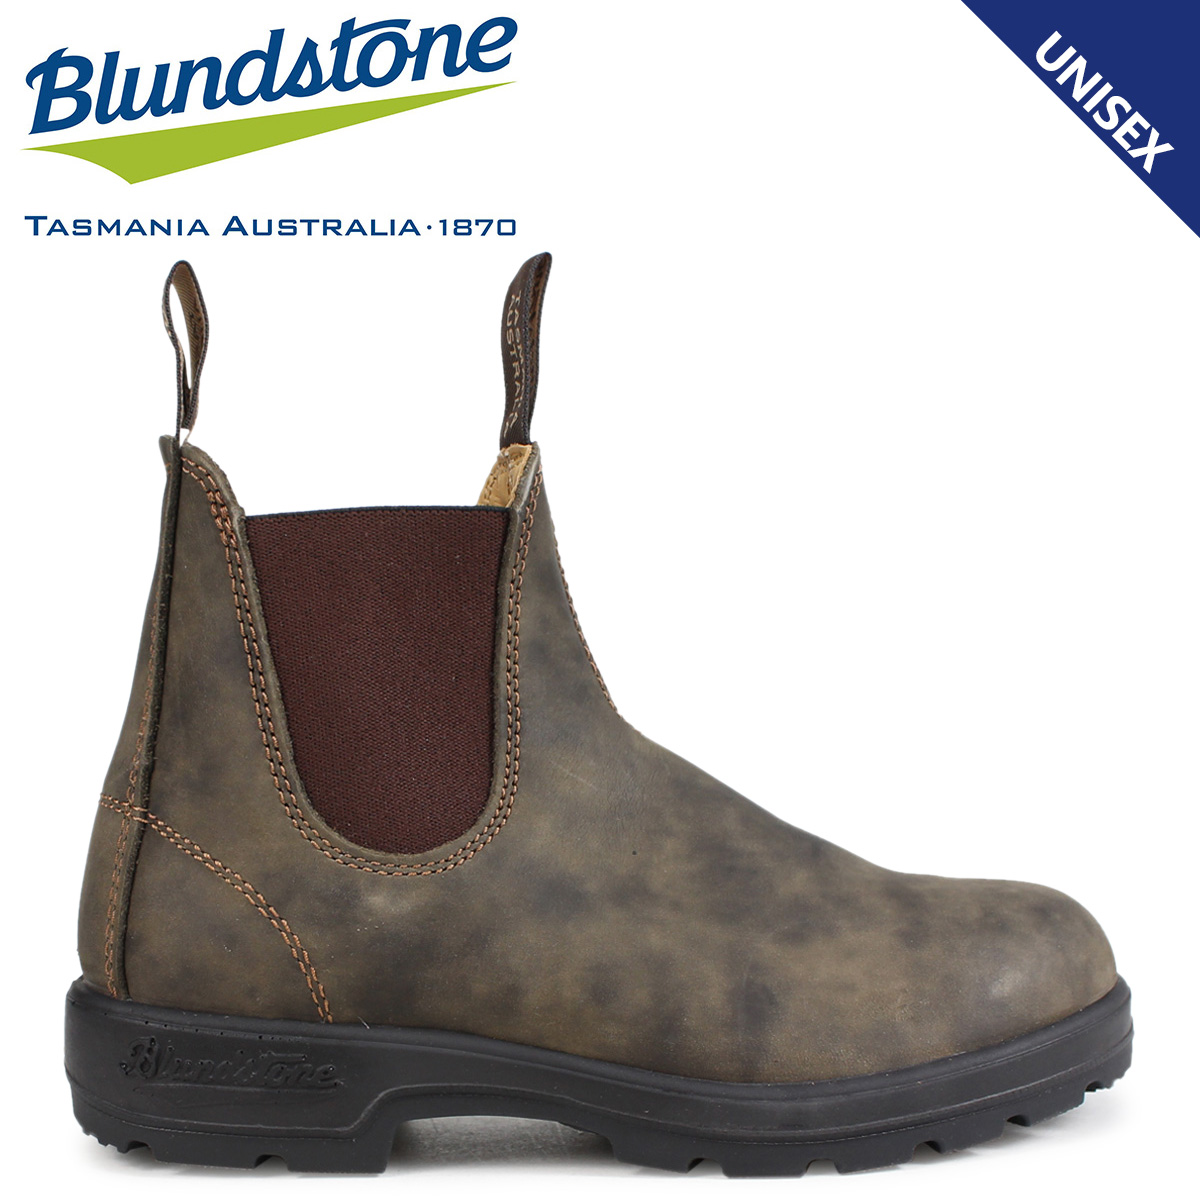 blundstone classic comfort 585